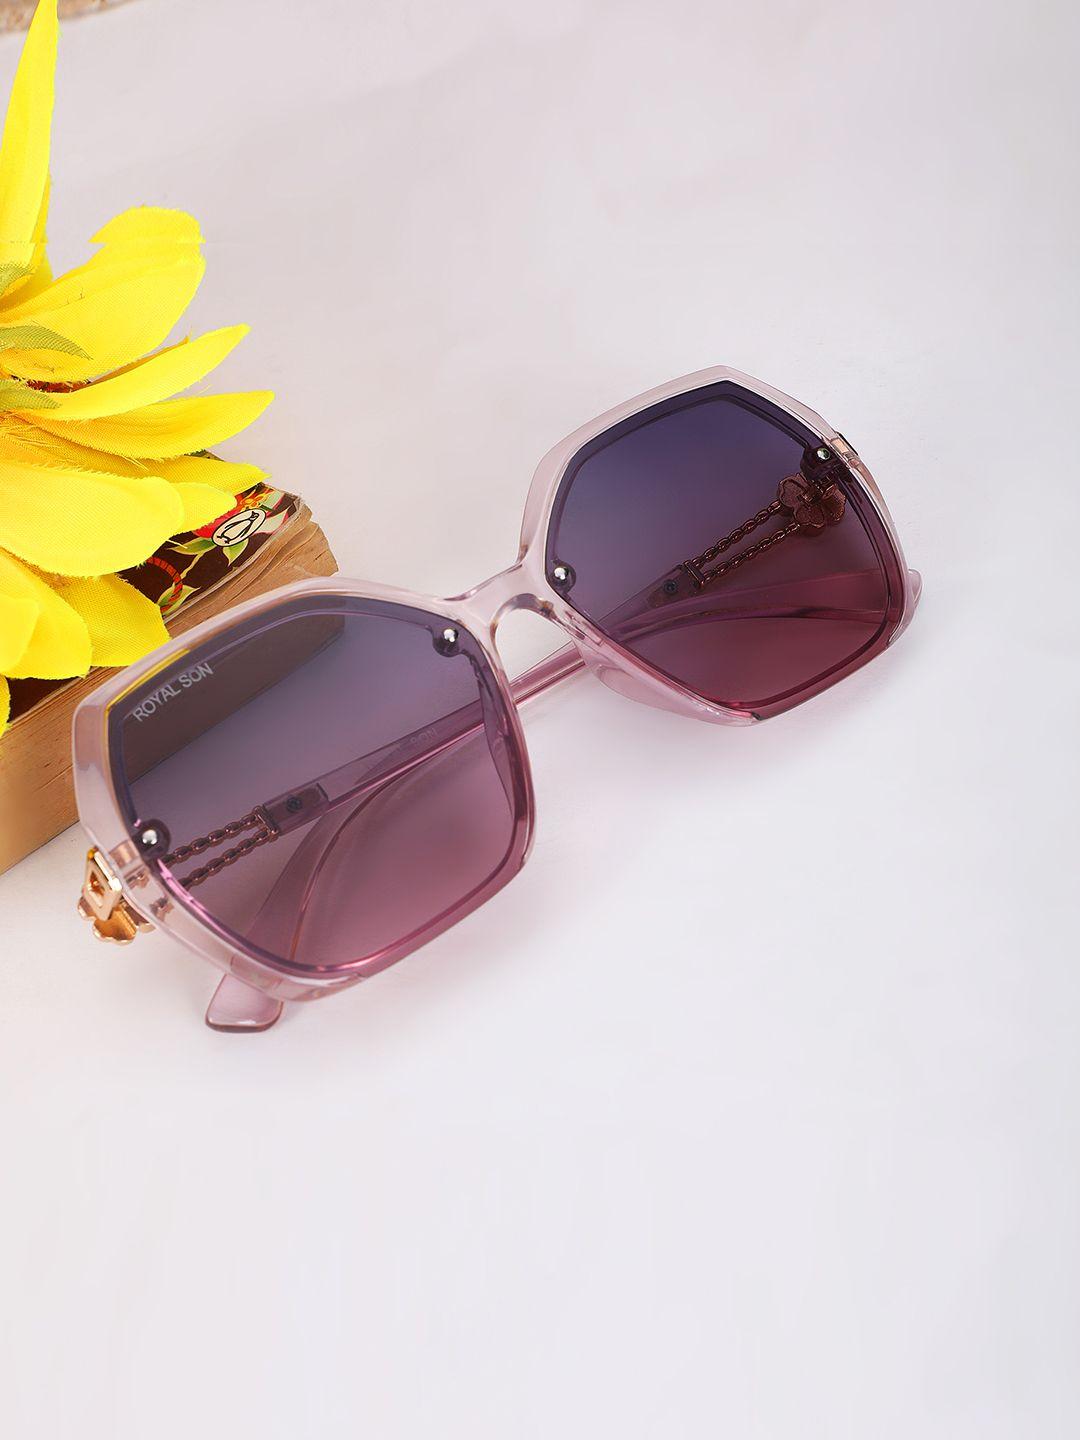 royal son women grey uv protected lens & purple butterfly sunglasses chiwm00115-c3